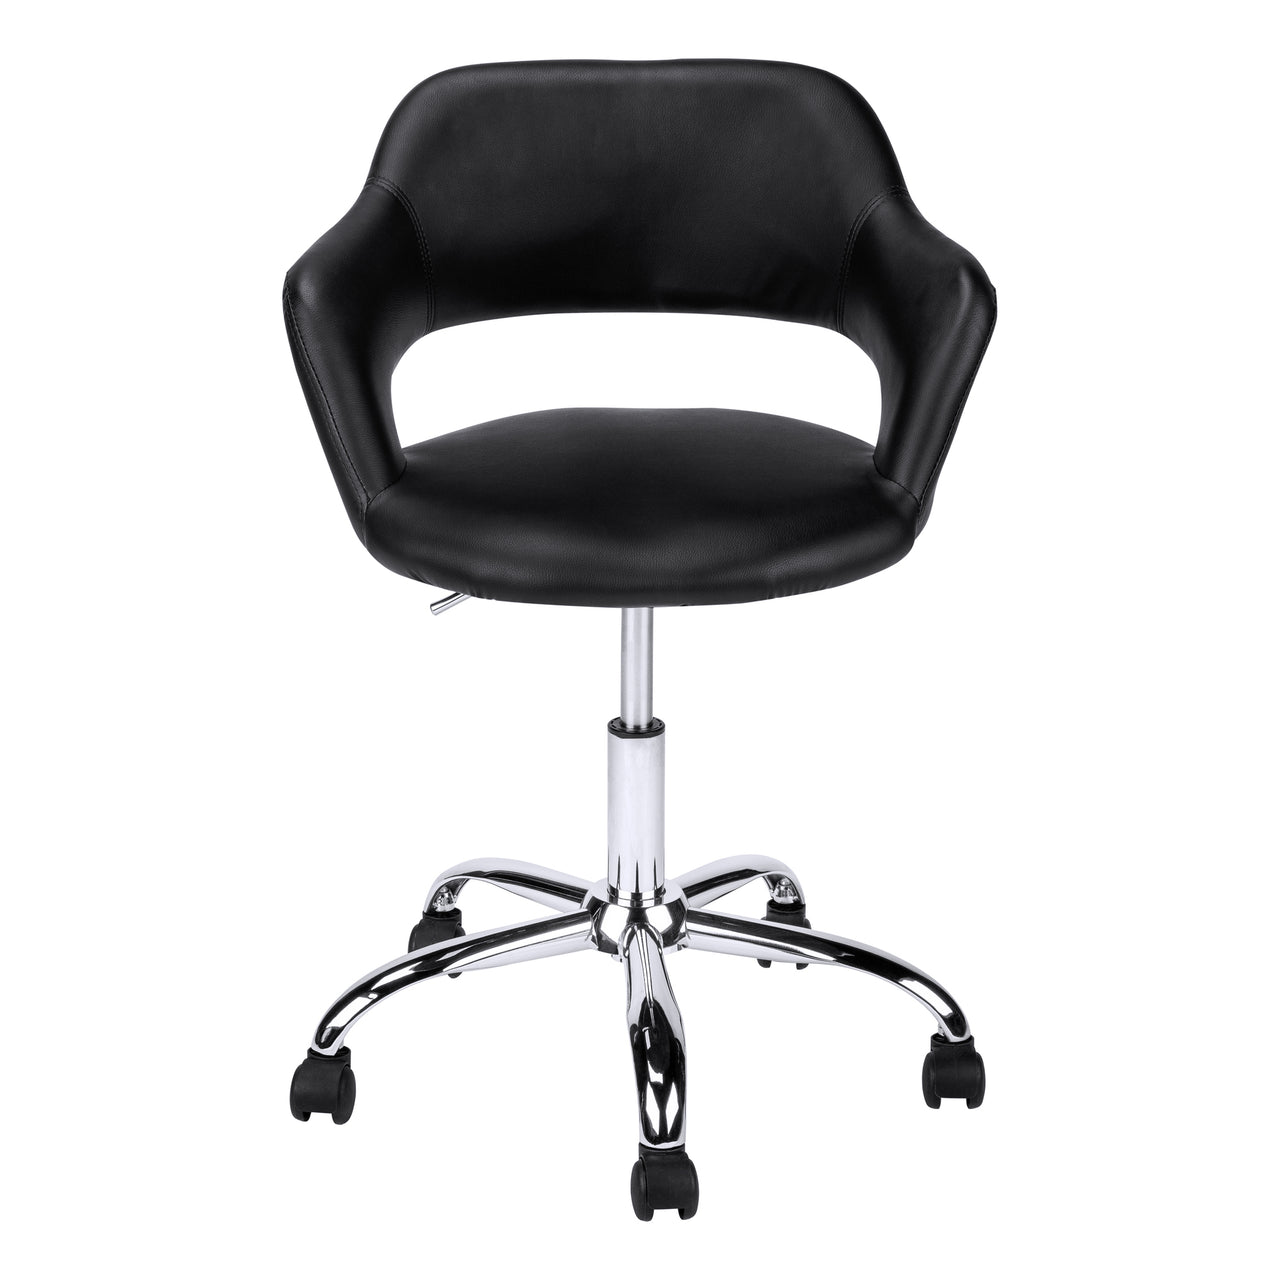 21" x 22.5" x 29" BlackChrome Metal Hydraulic Lift Base  Office Chair-0